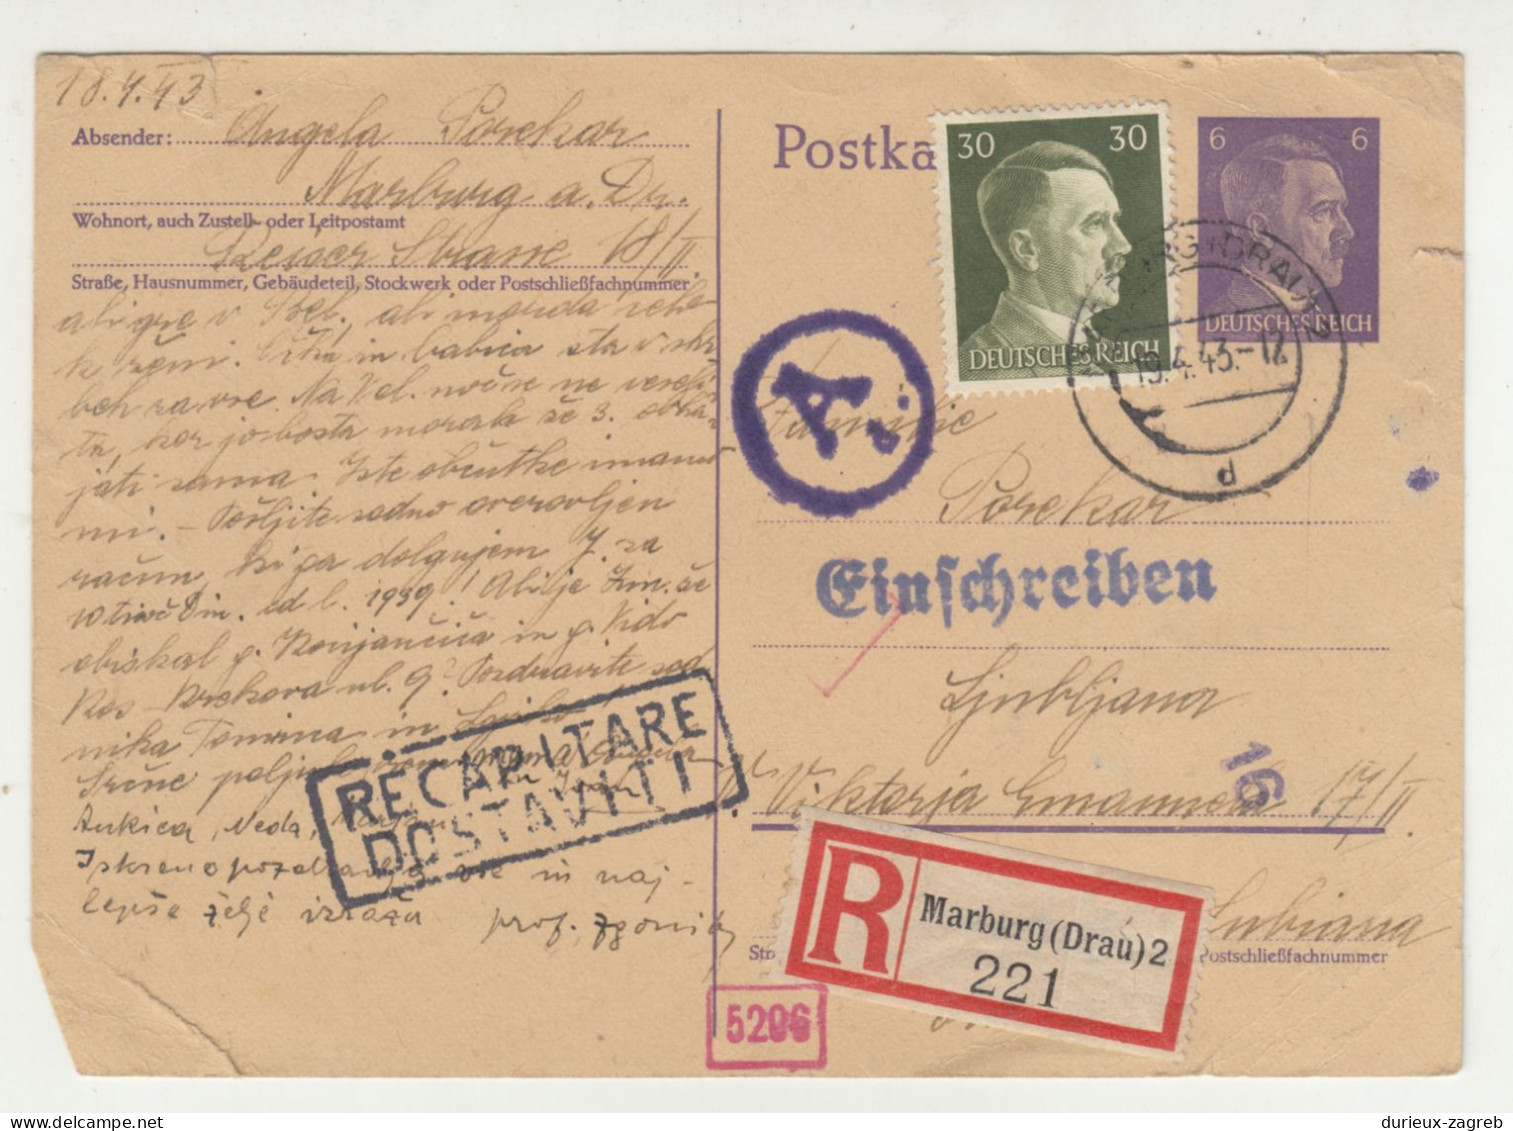 Germany Reich Postal Stationery Postcard Posted Registered 1943 Marburg A/D To Ljubljana B240503 - Slovenia